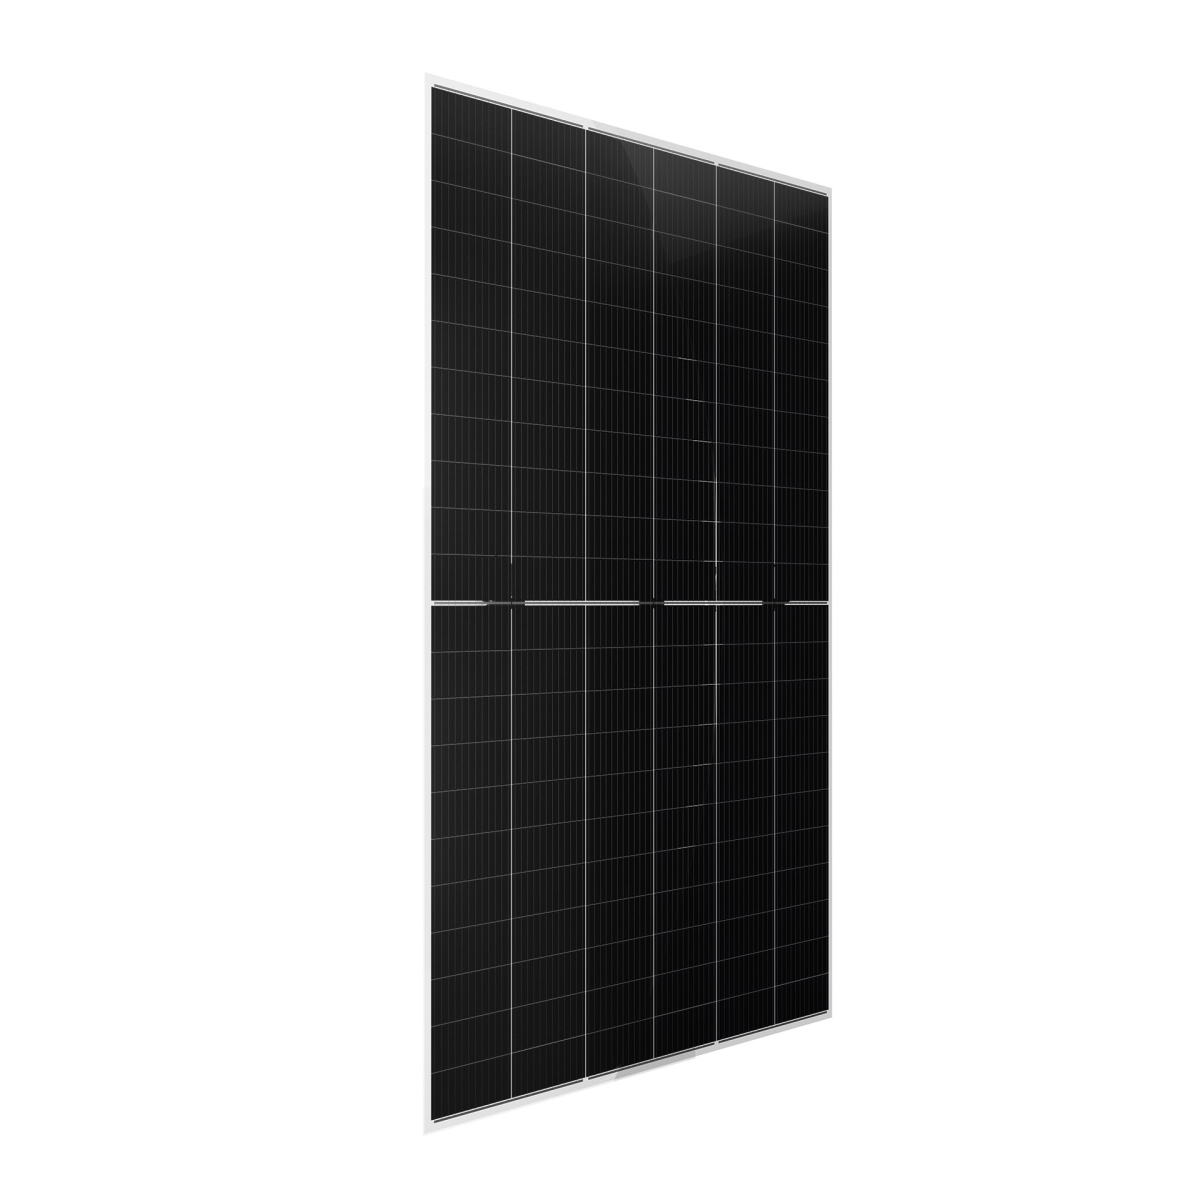 CW Enerji 670Wp M12 132PM Cells Bifacial G2G Half-Cut MB Solar Panel